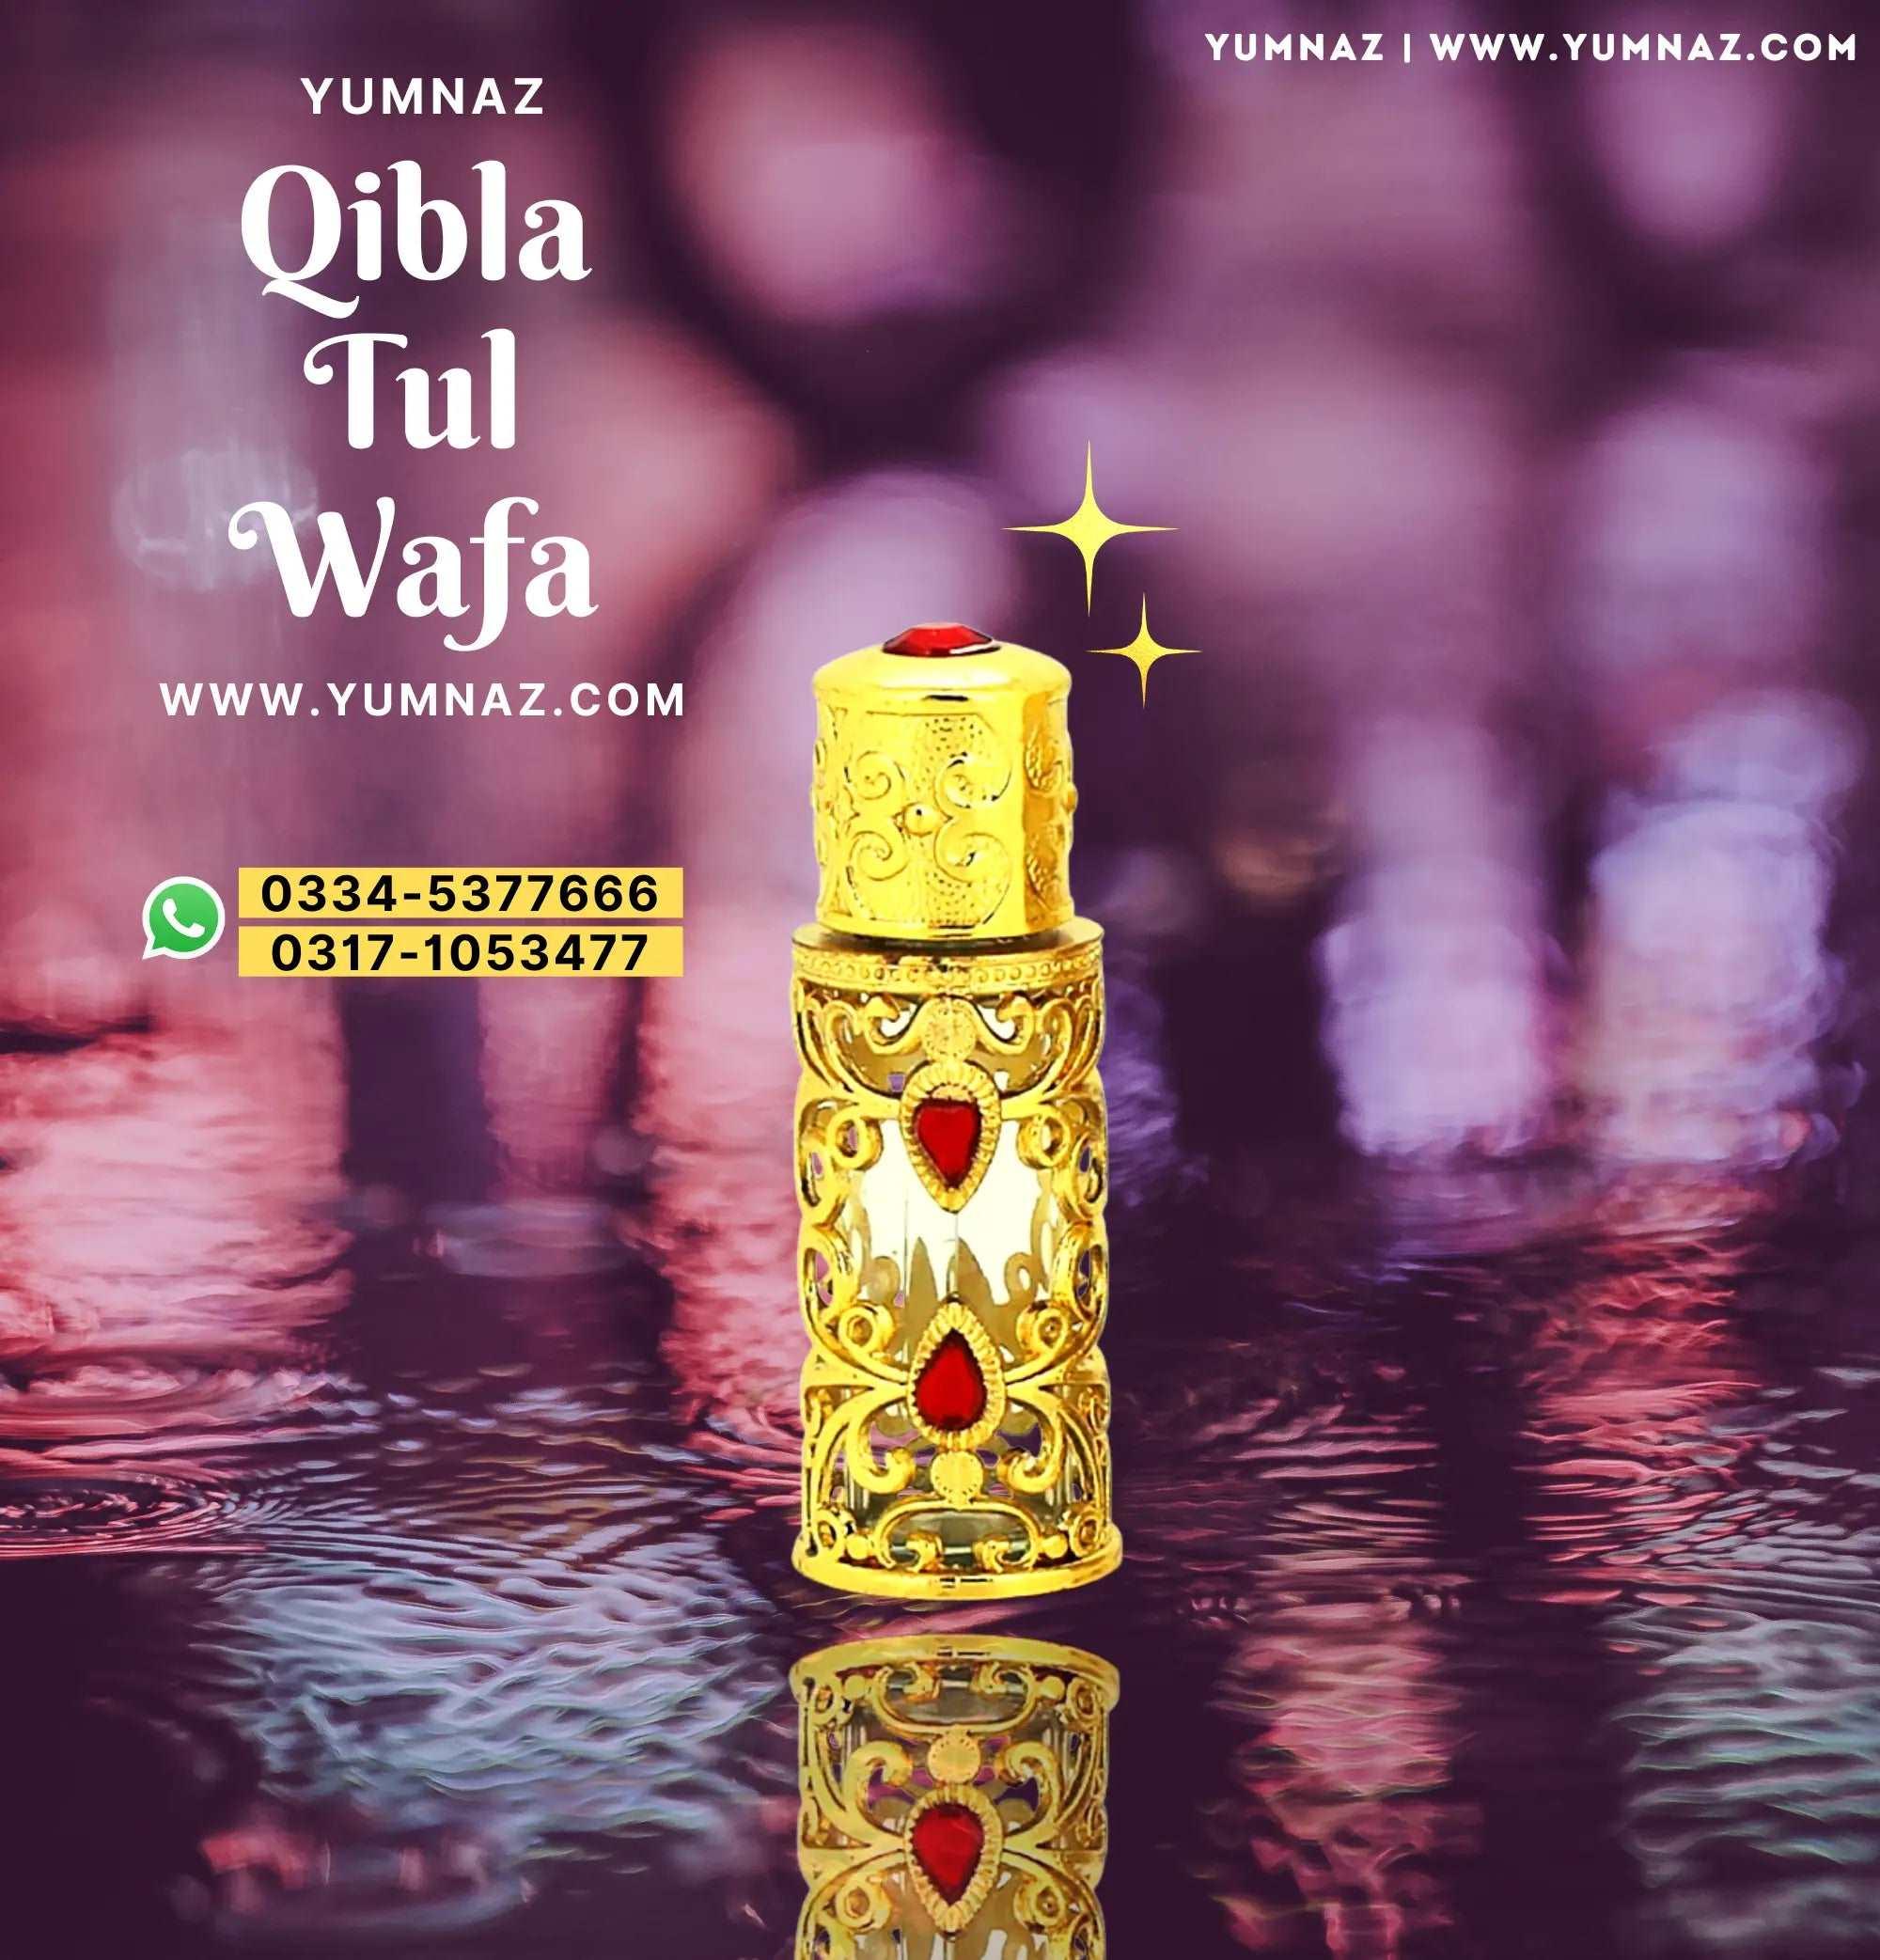 Qiblatul Wafa Perfume in Pakistan - yumnaz